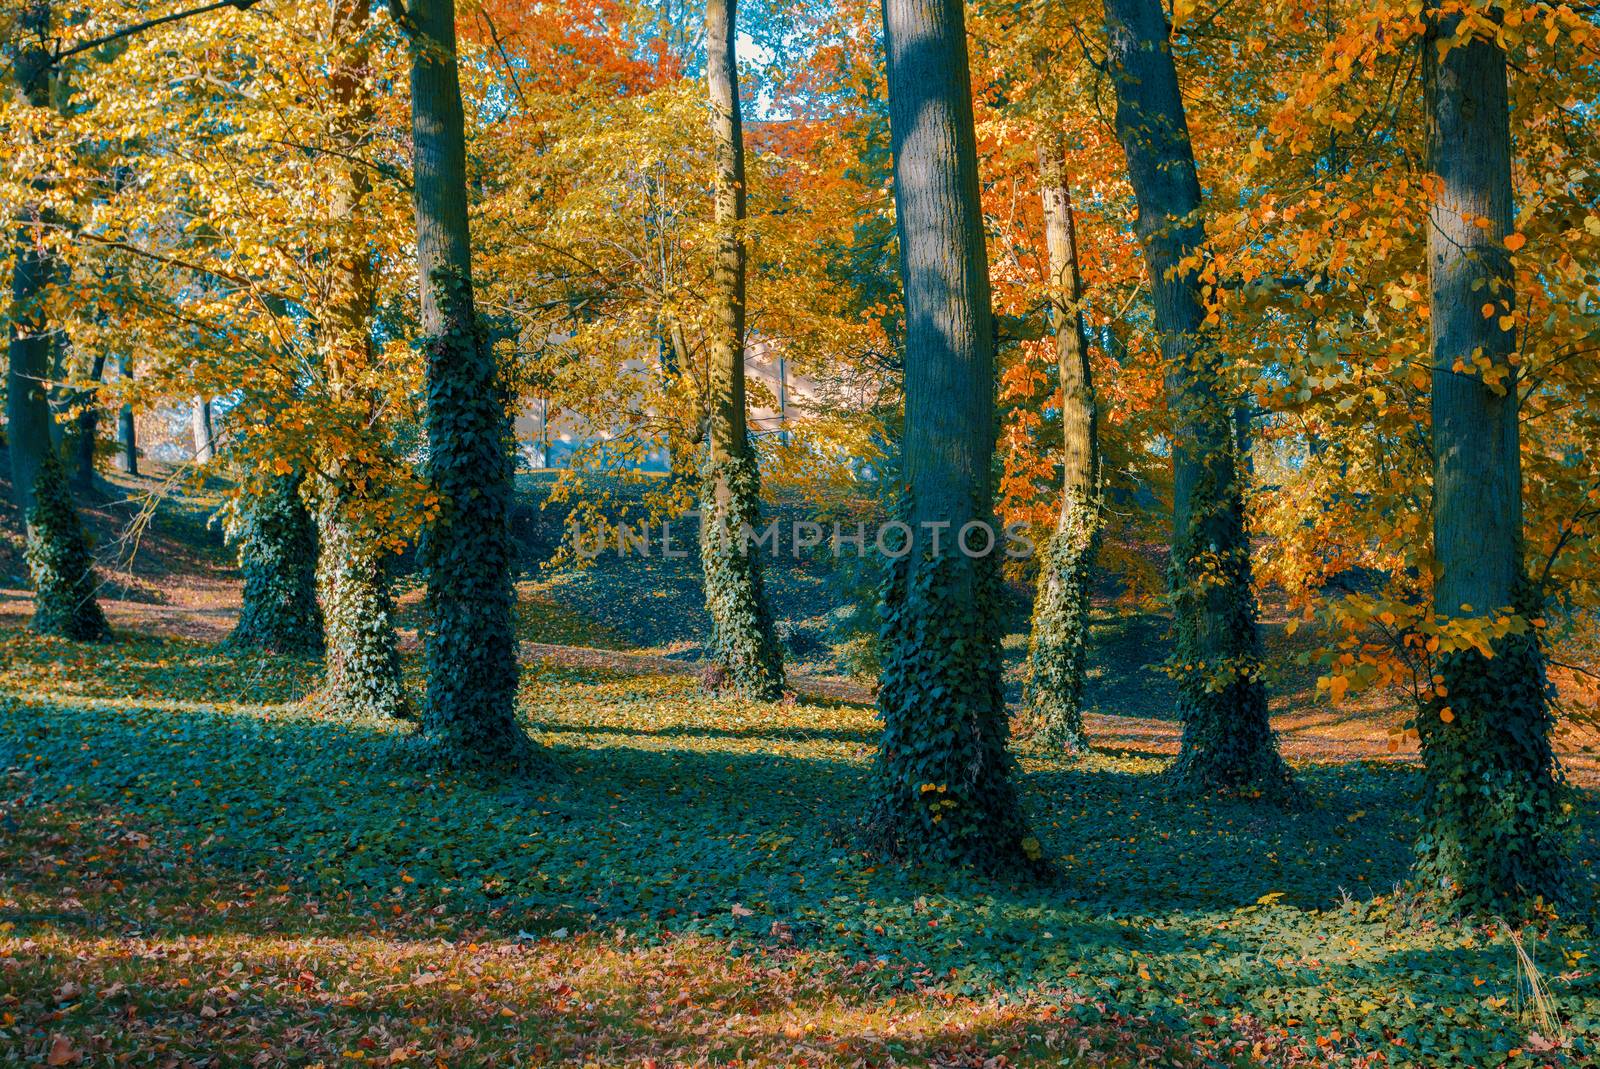 autumn in park in fall season by artush